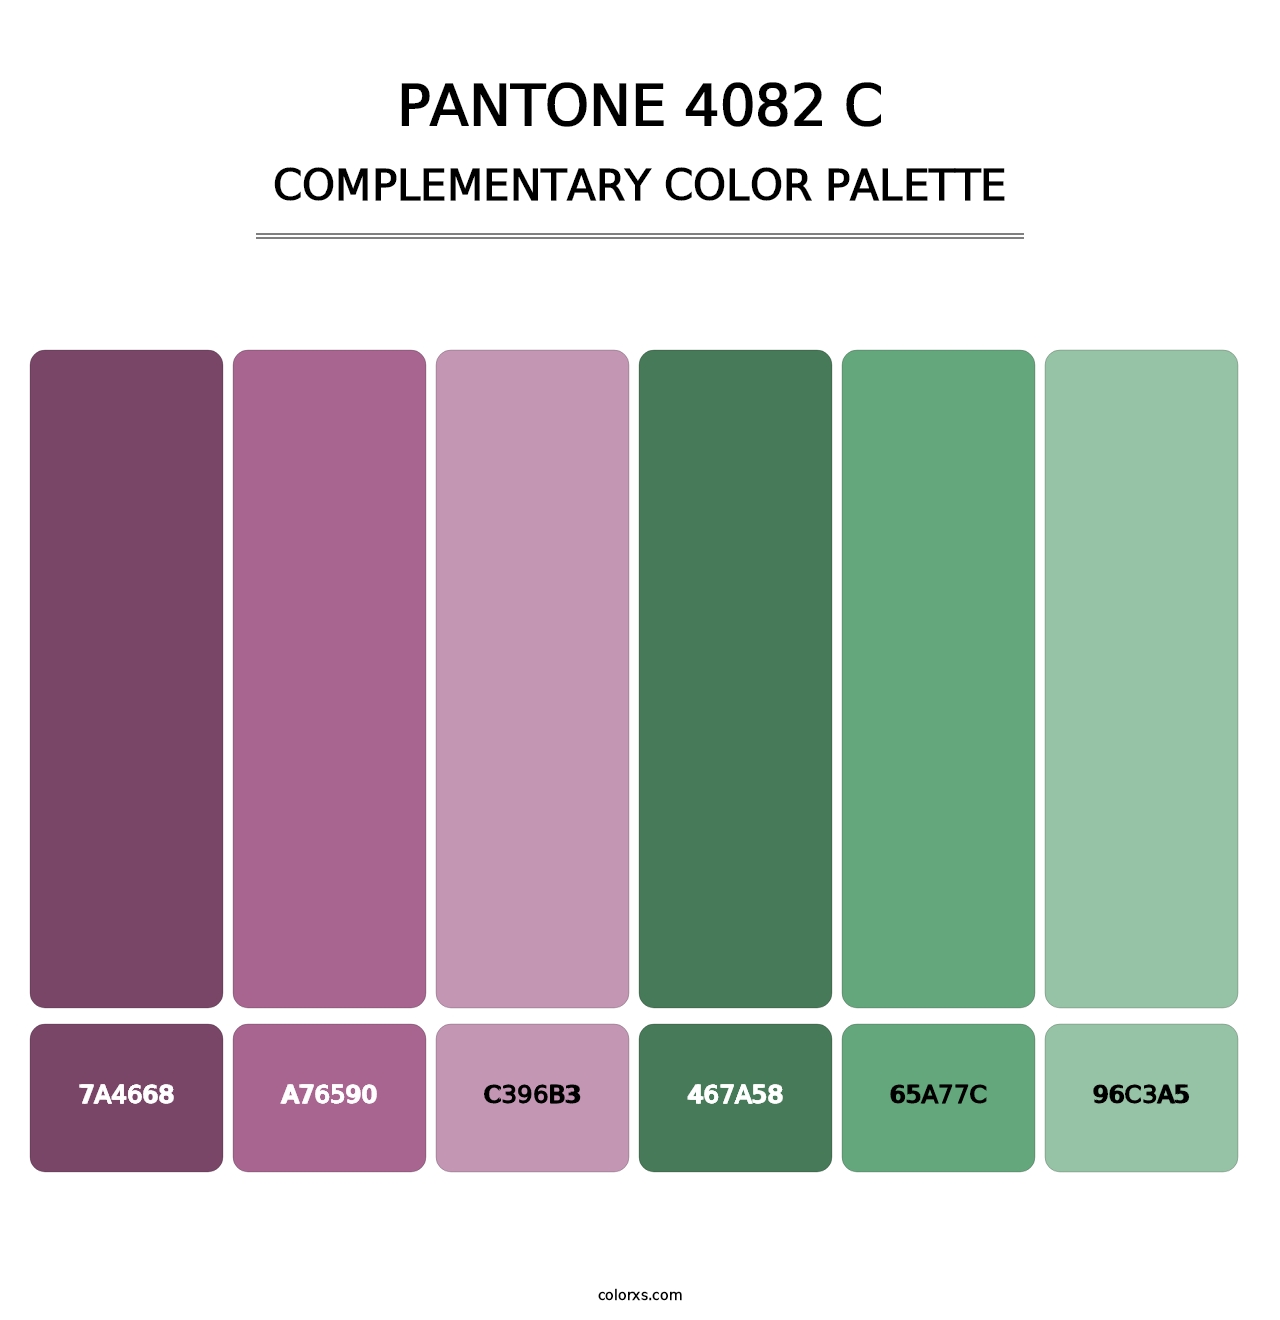 PANTONE 4082 C - Complementary Color Palette